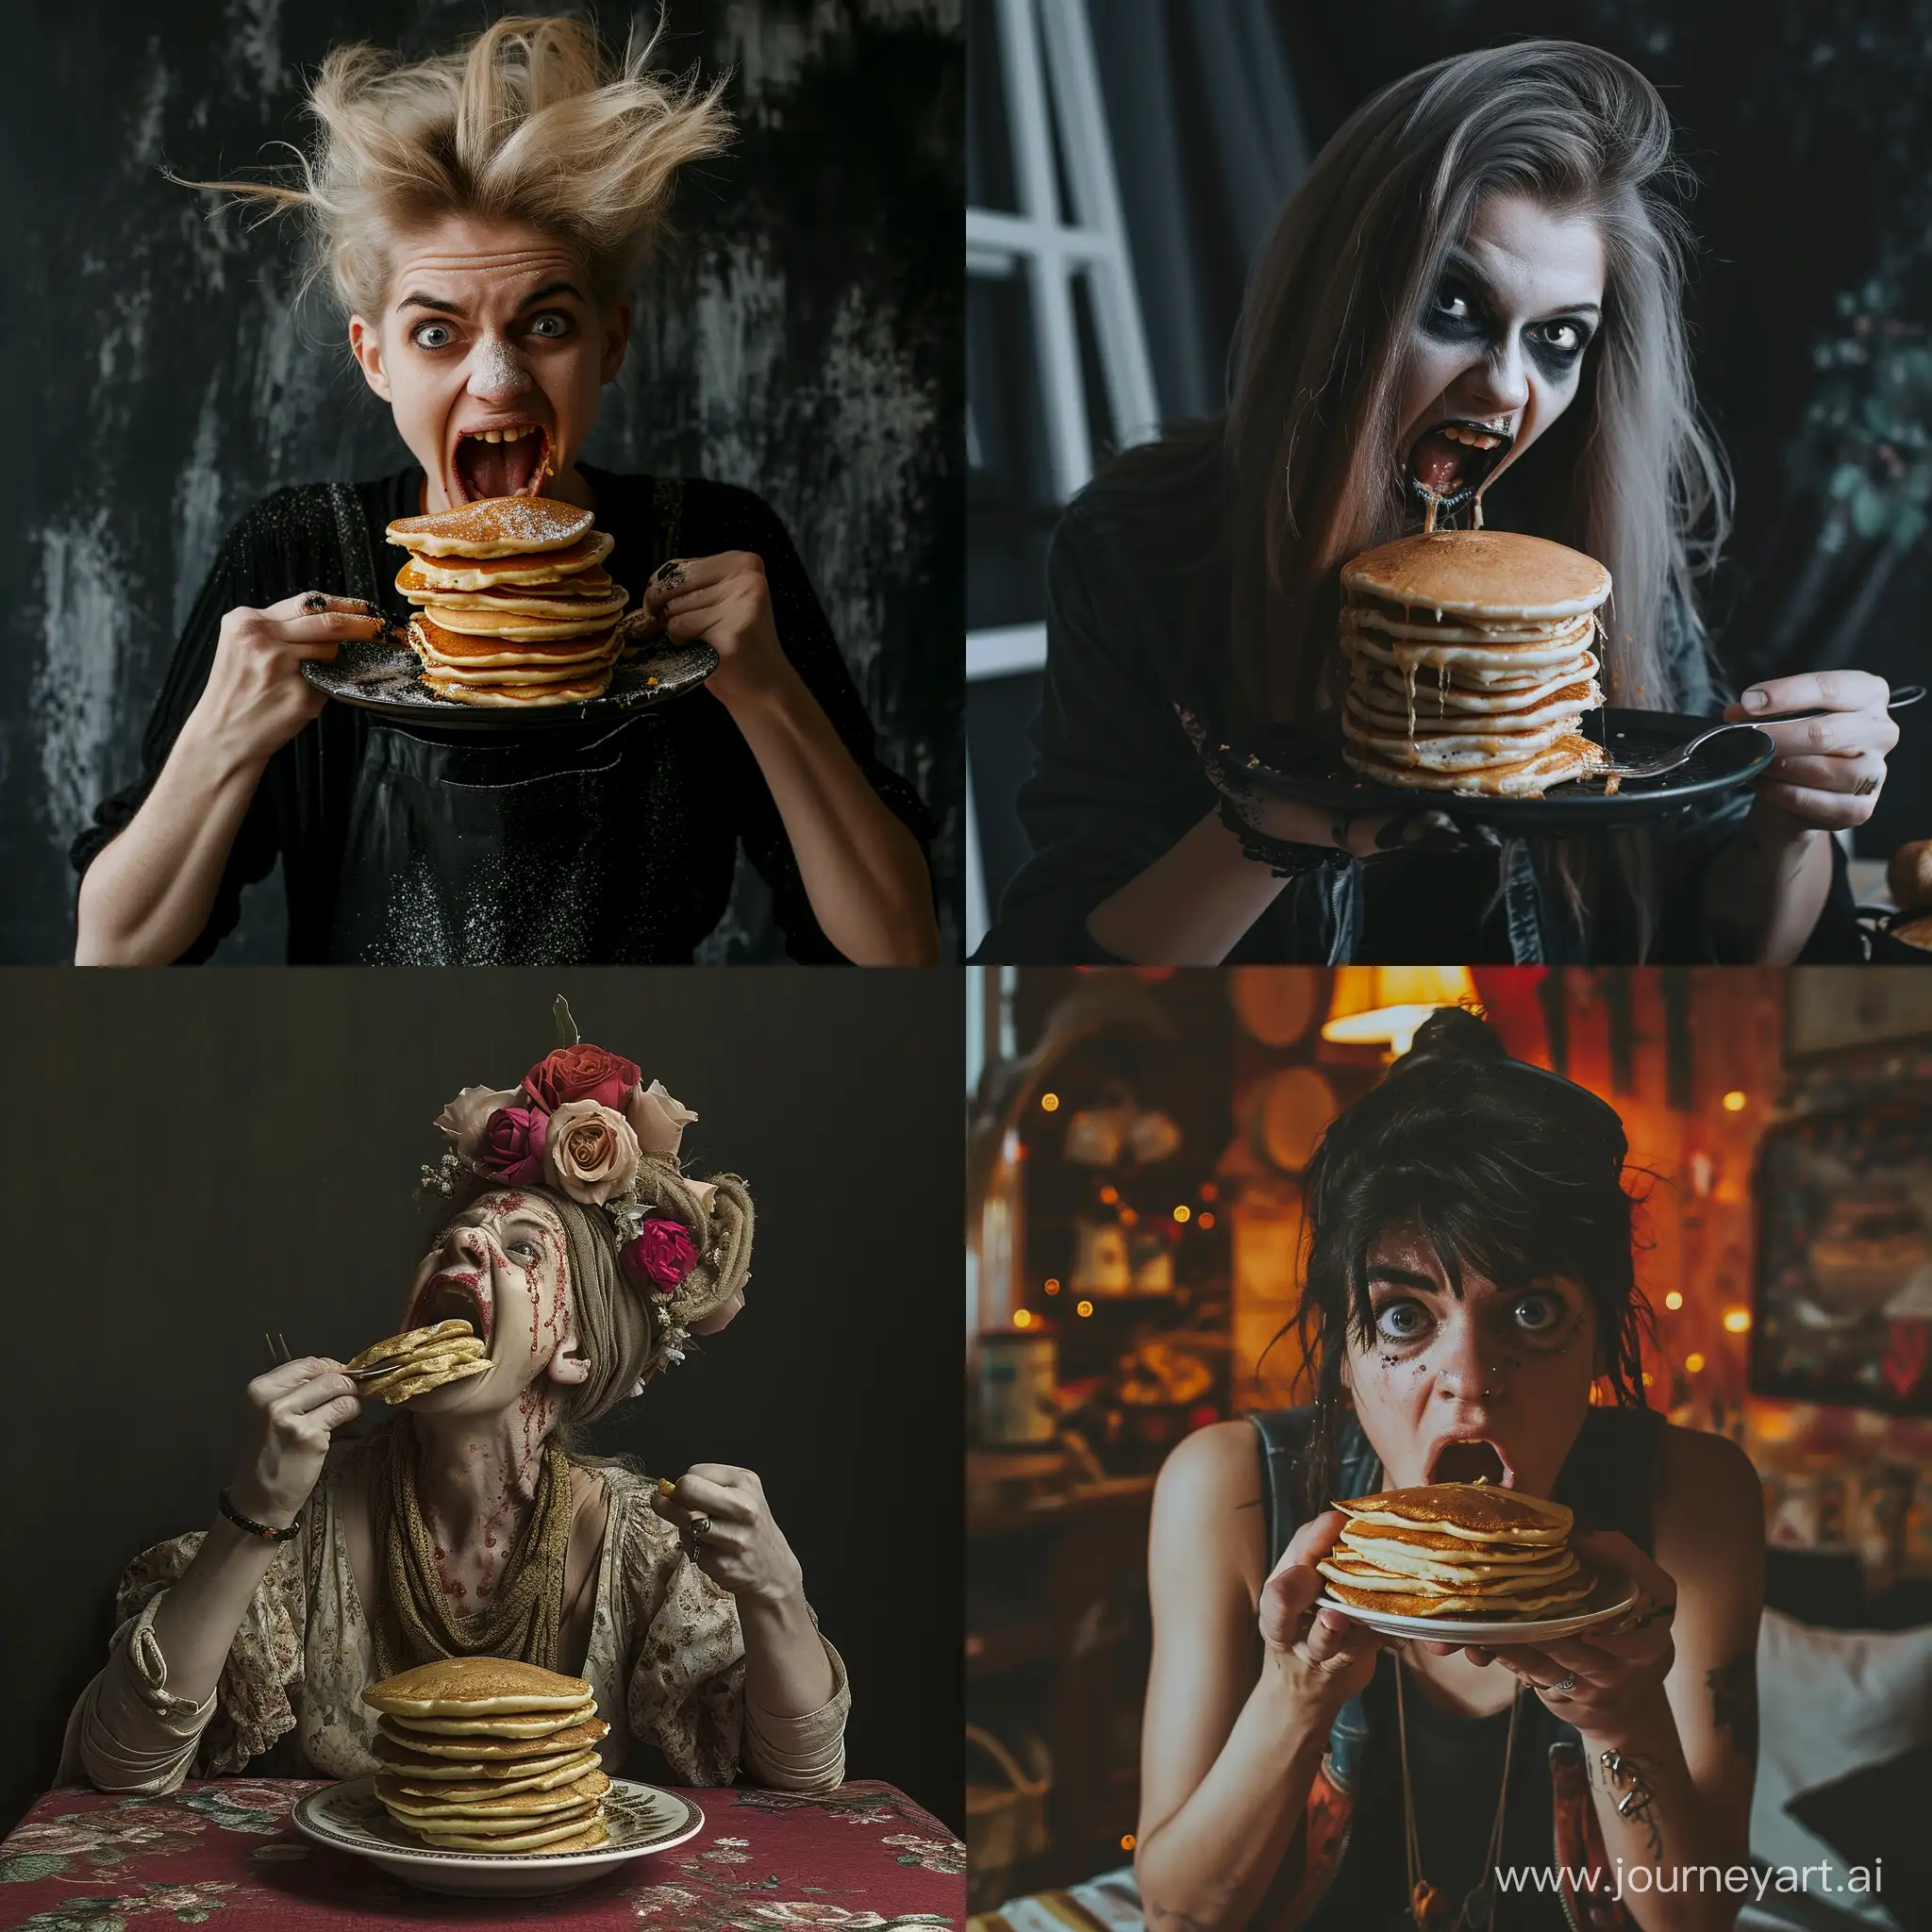 Eccentric-Woman-Enjoying-Pancakes-with-Unusual-Flair